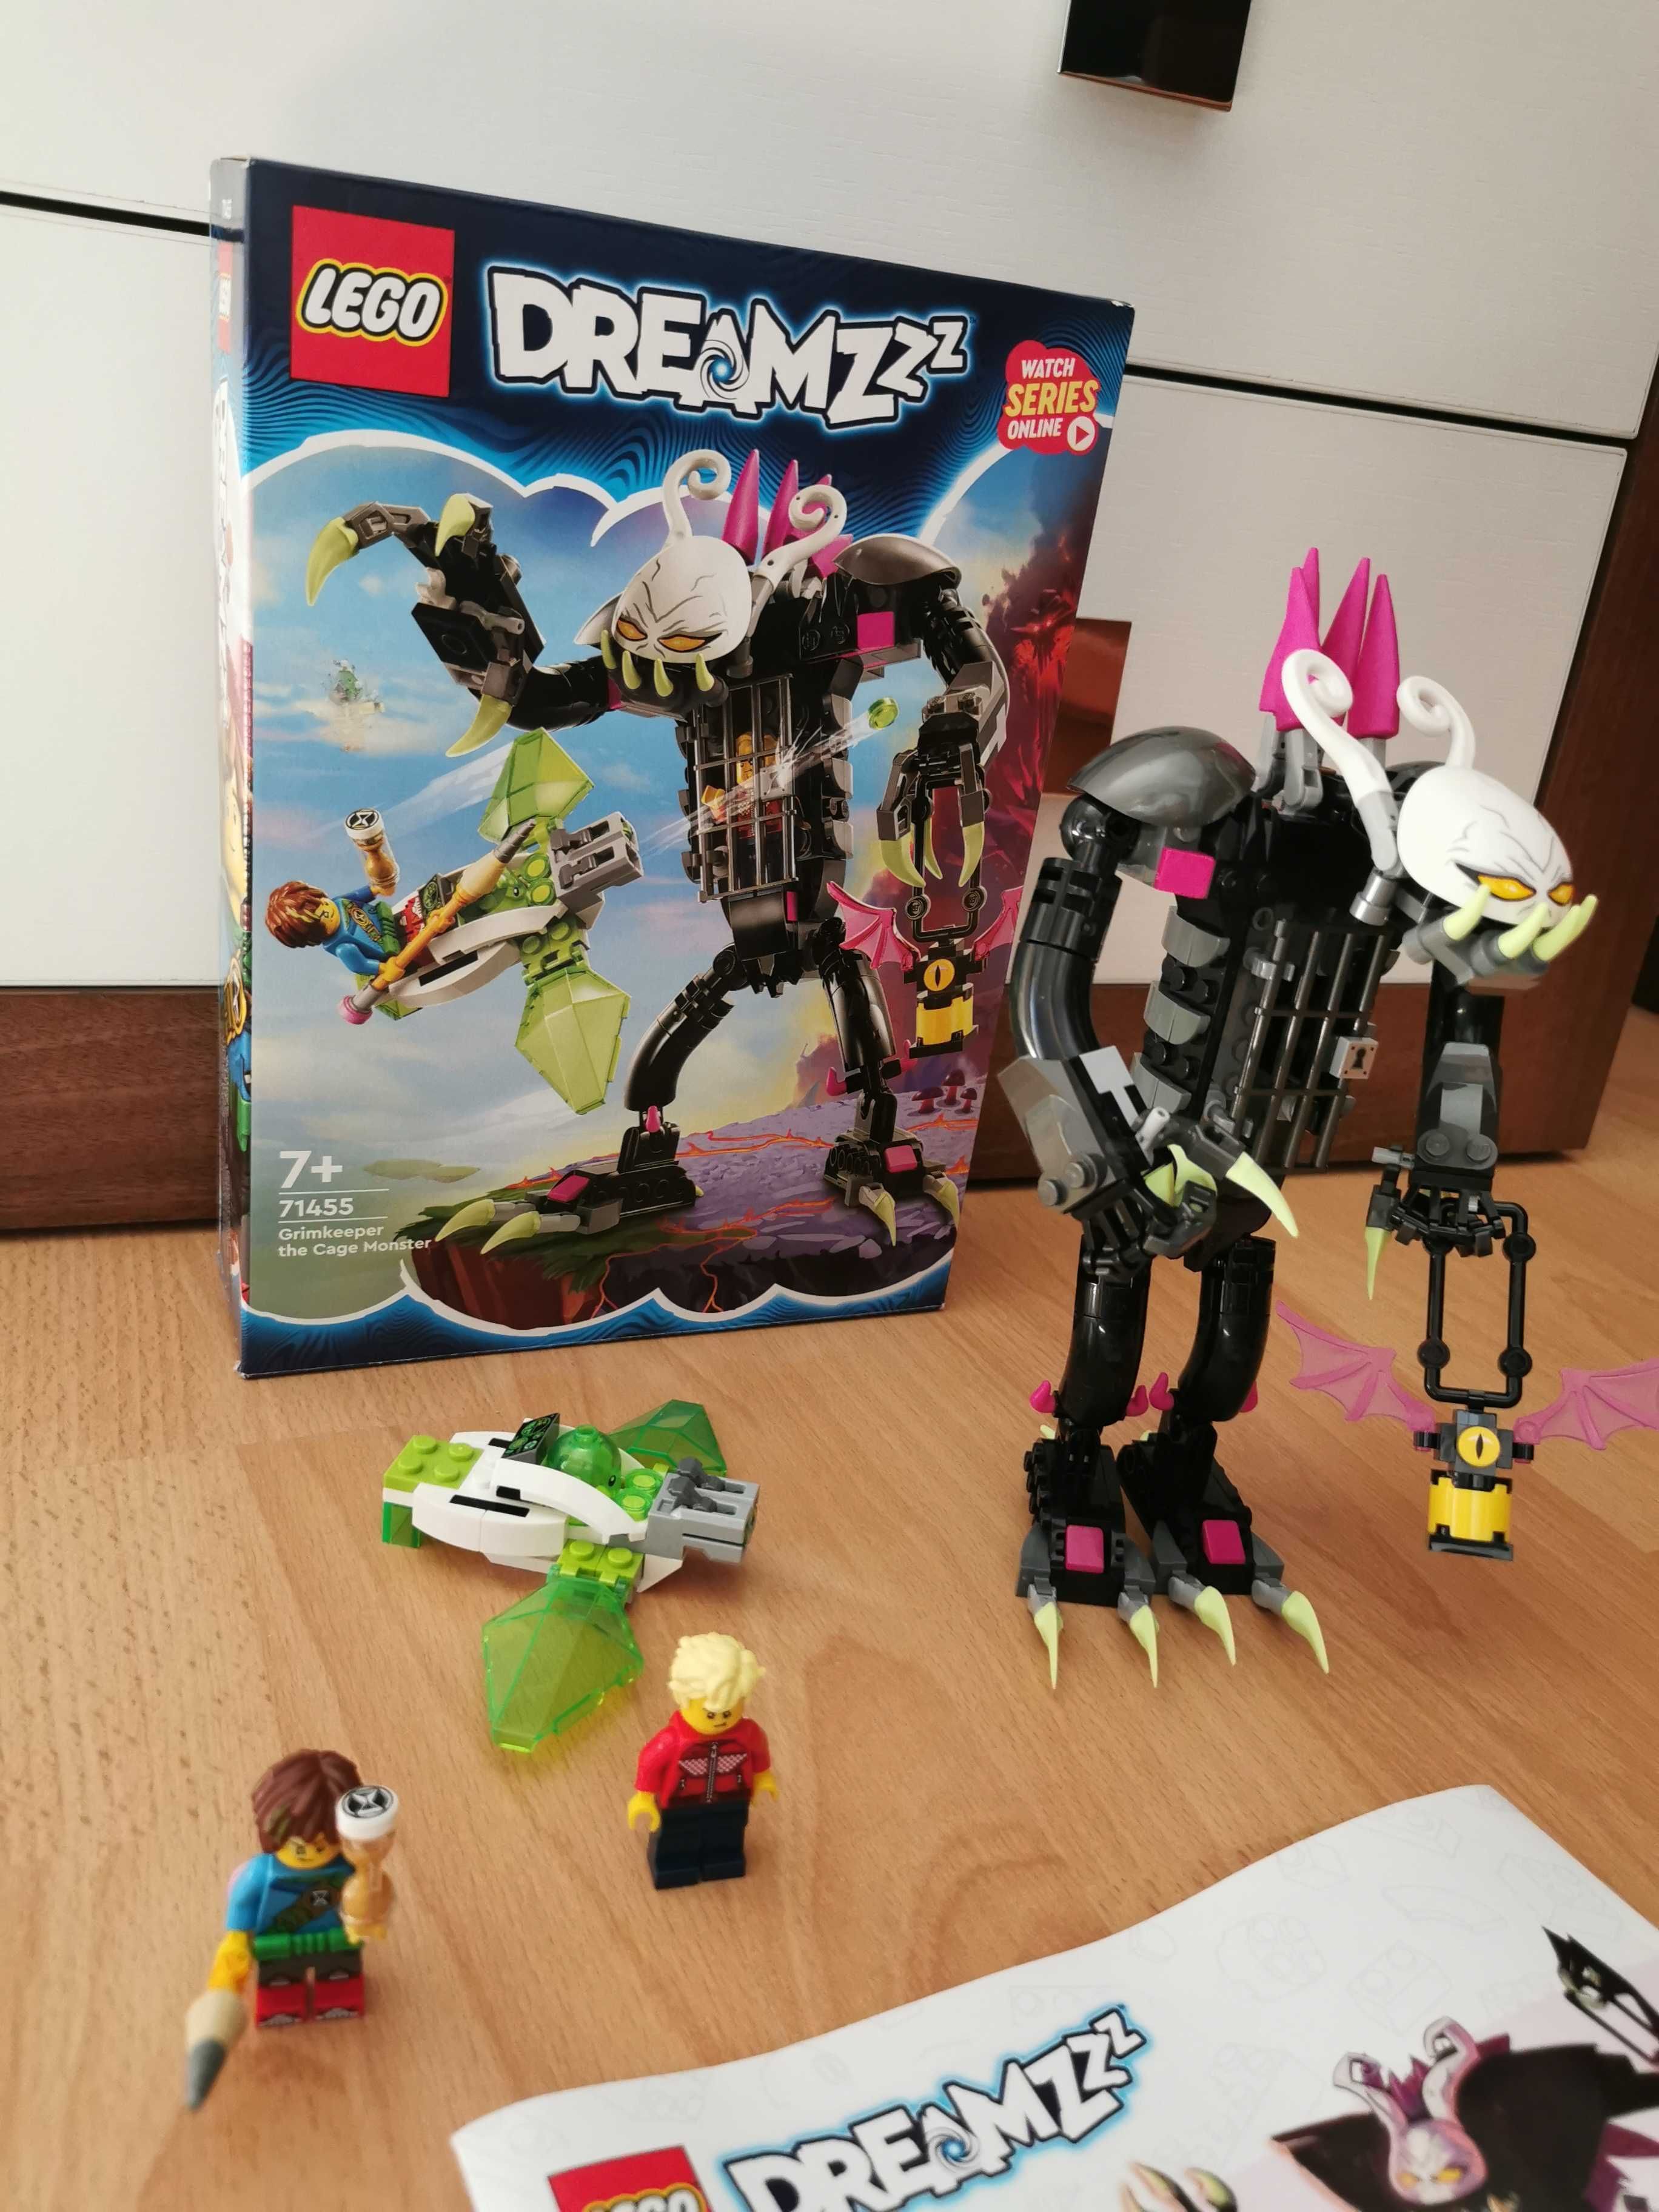 Vand LEGO Dreamzz 71455 Grimkeeper monstrul cusca, in stare impecabila